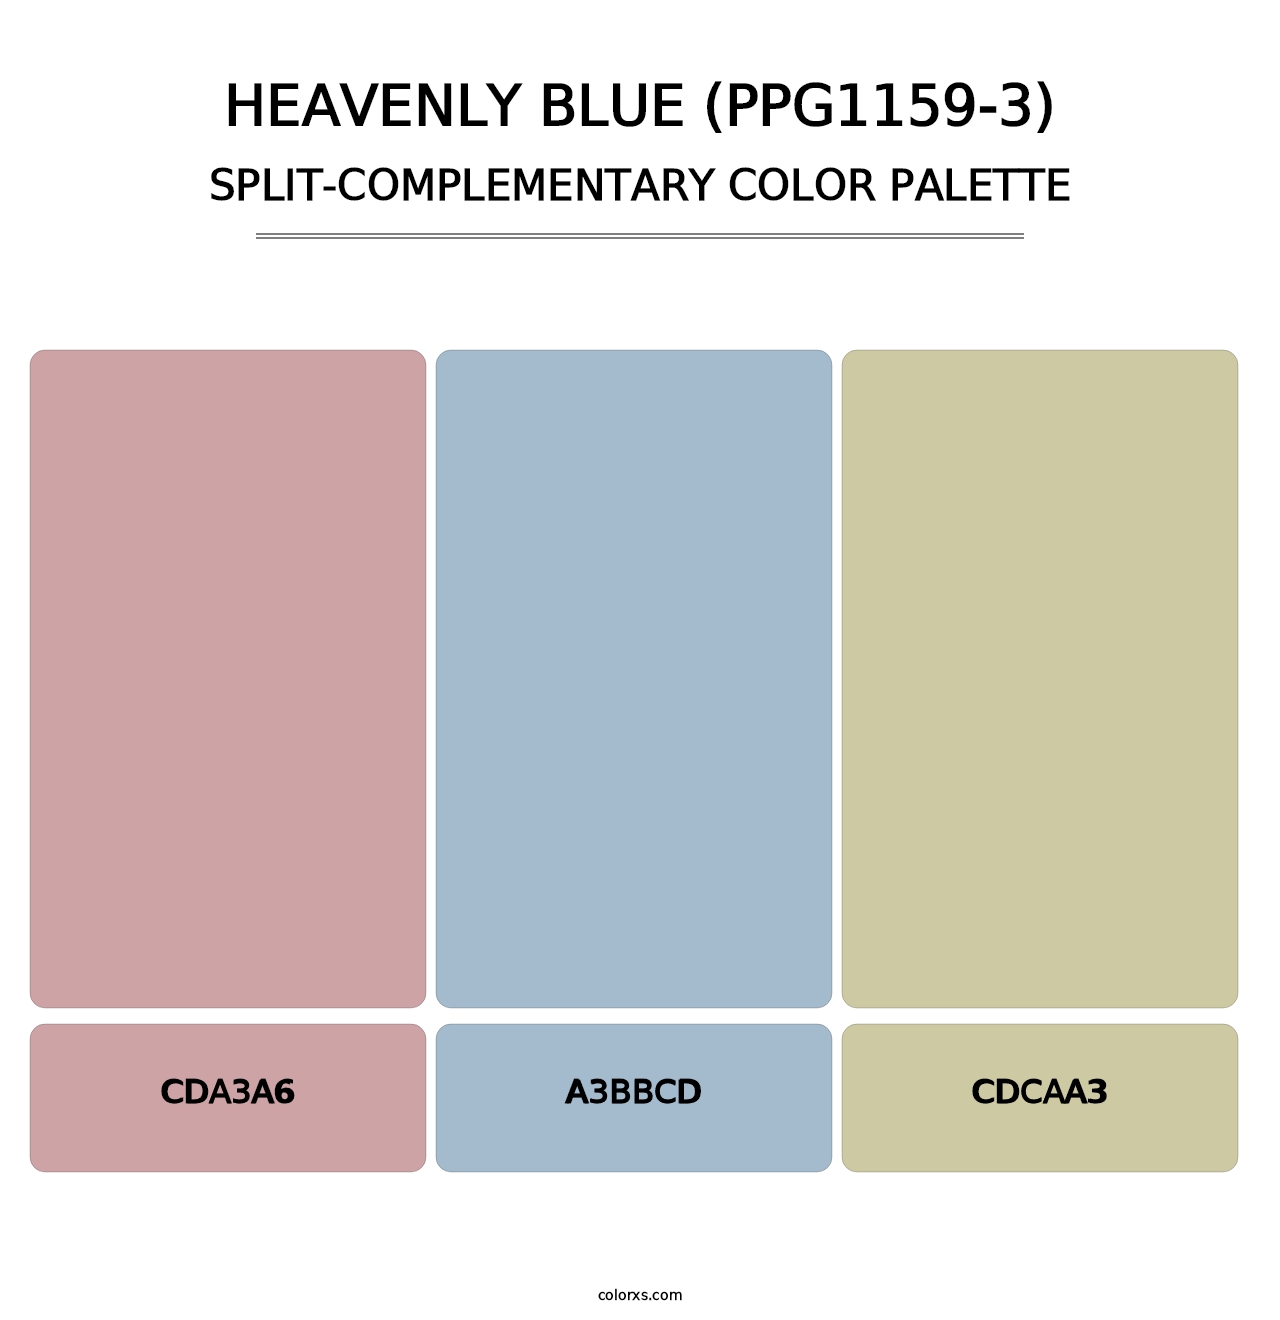 Heavenly Blue (PPG1159-3) - Split-Complementary Color Palette